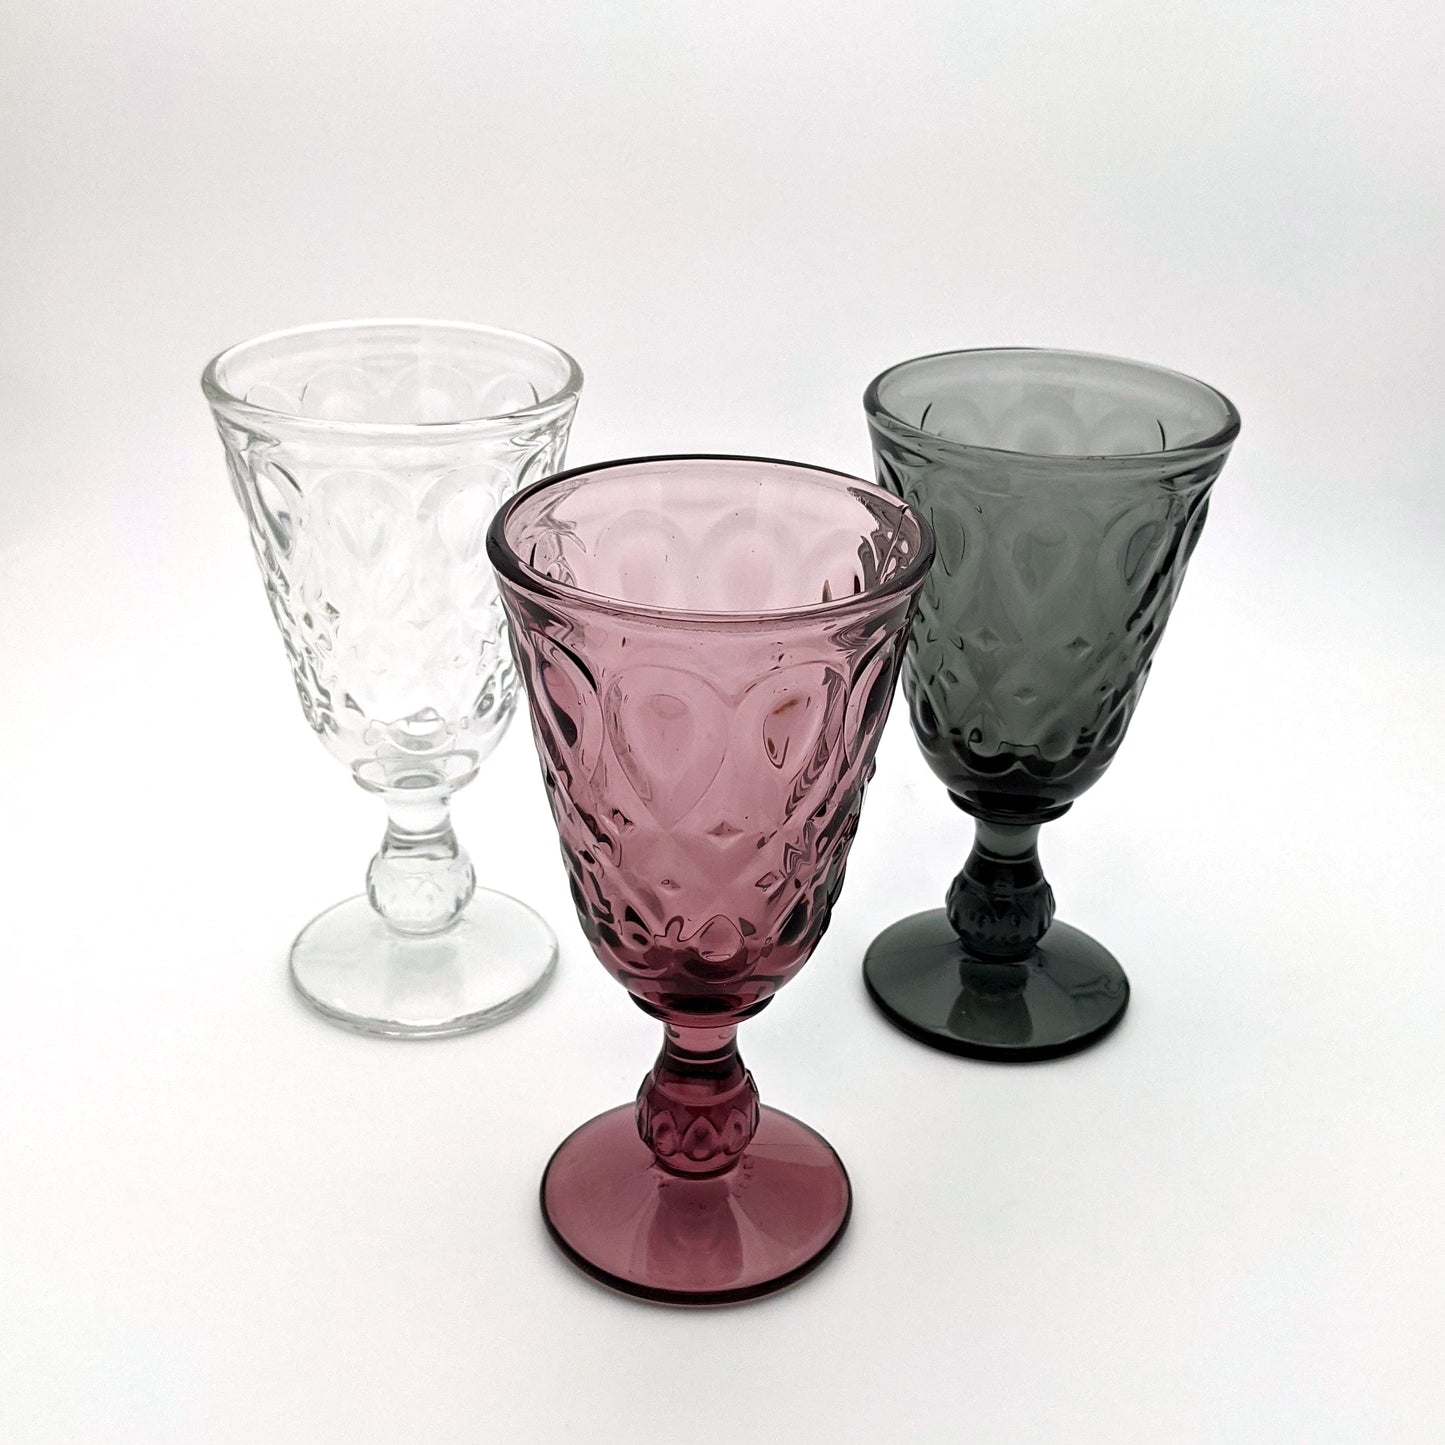 Renaissance wine glasses (x2) - pink - French Address